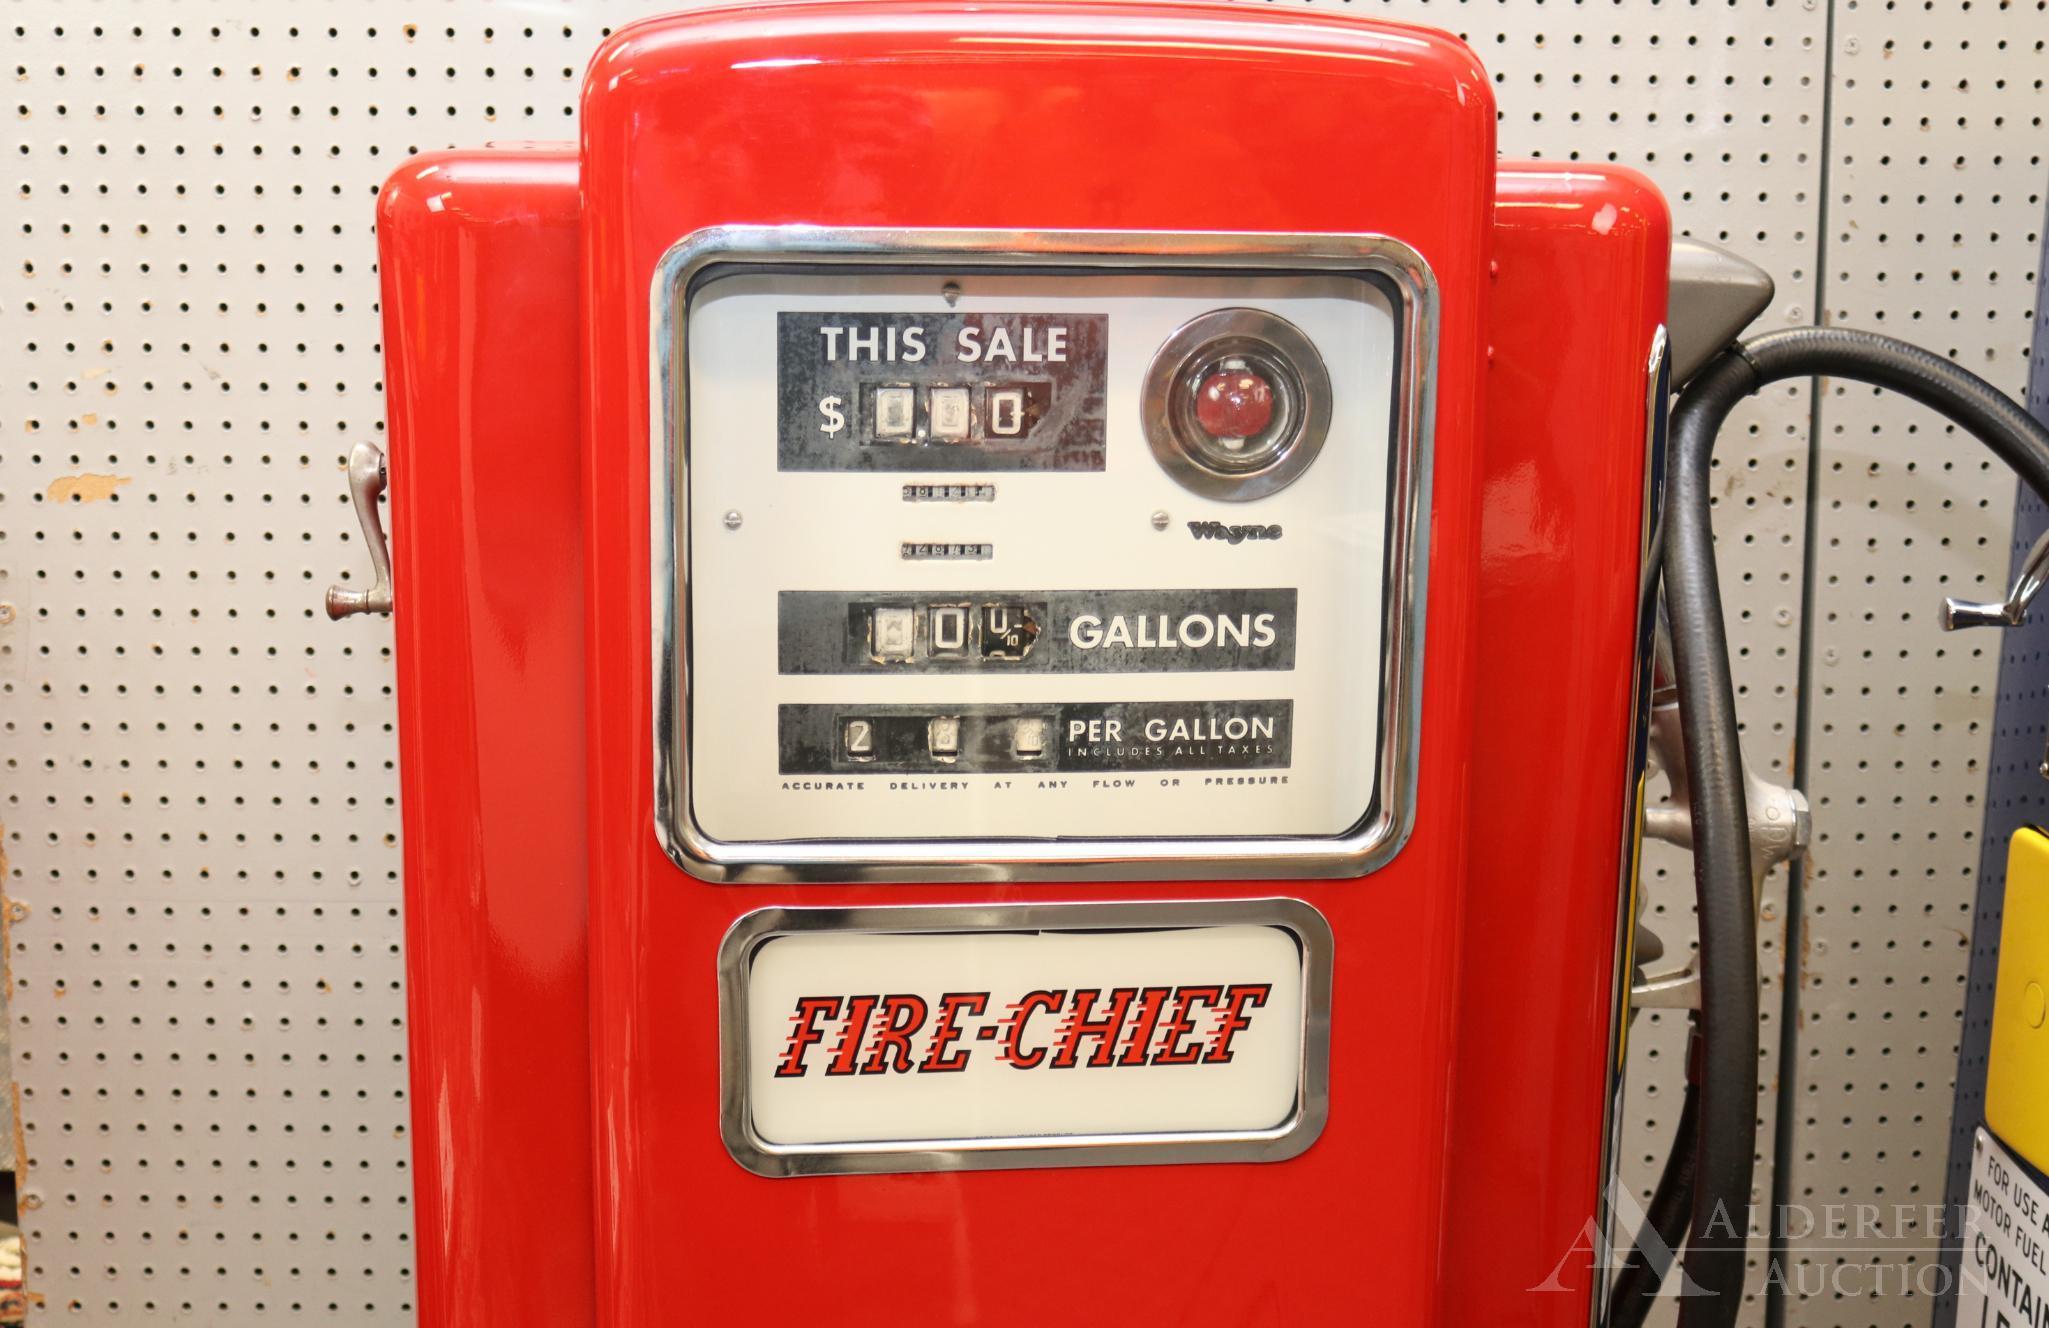 Wayne 100-B Gas Pump Restored in Texaco Red Chief Gasoline